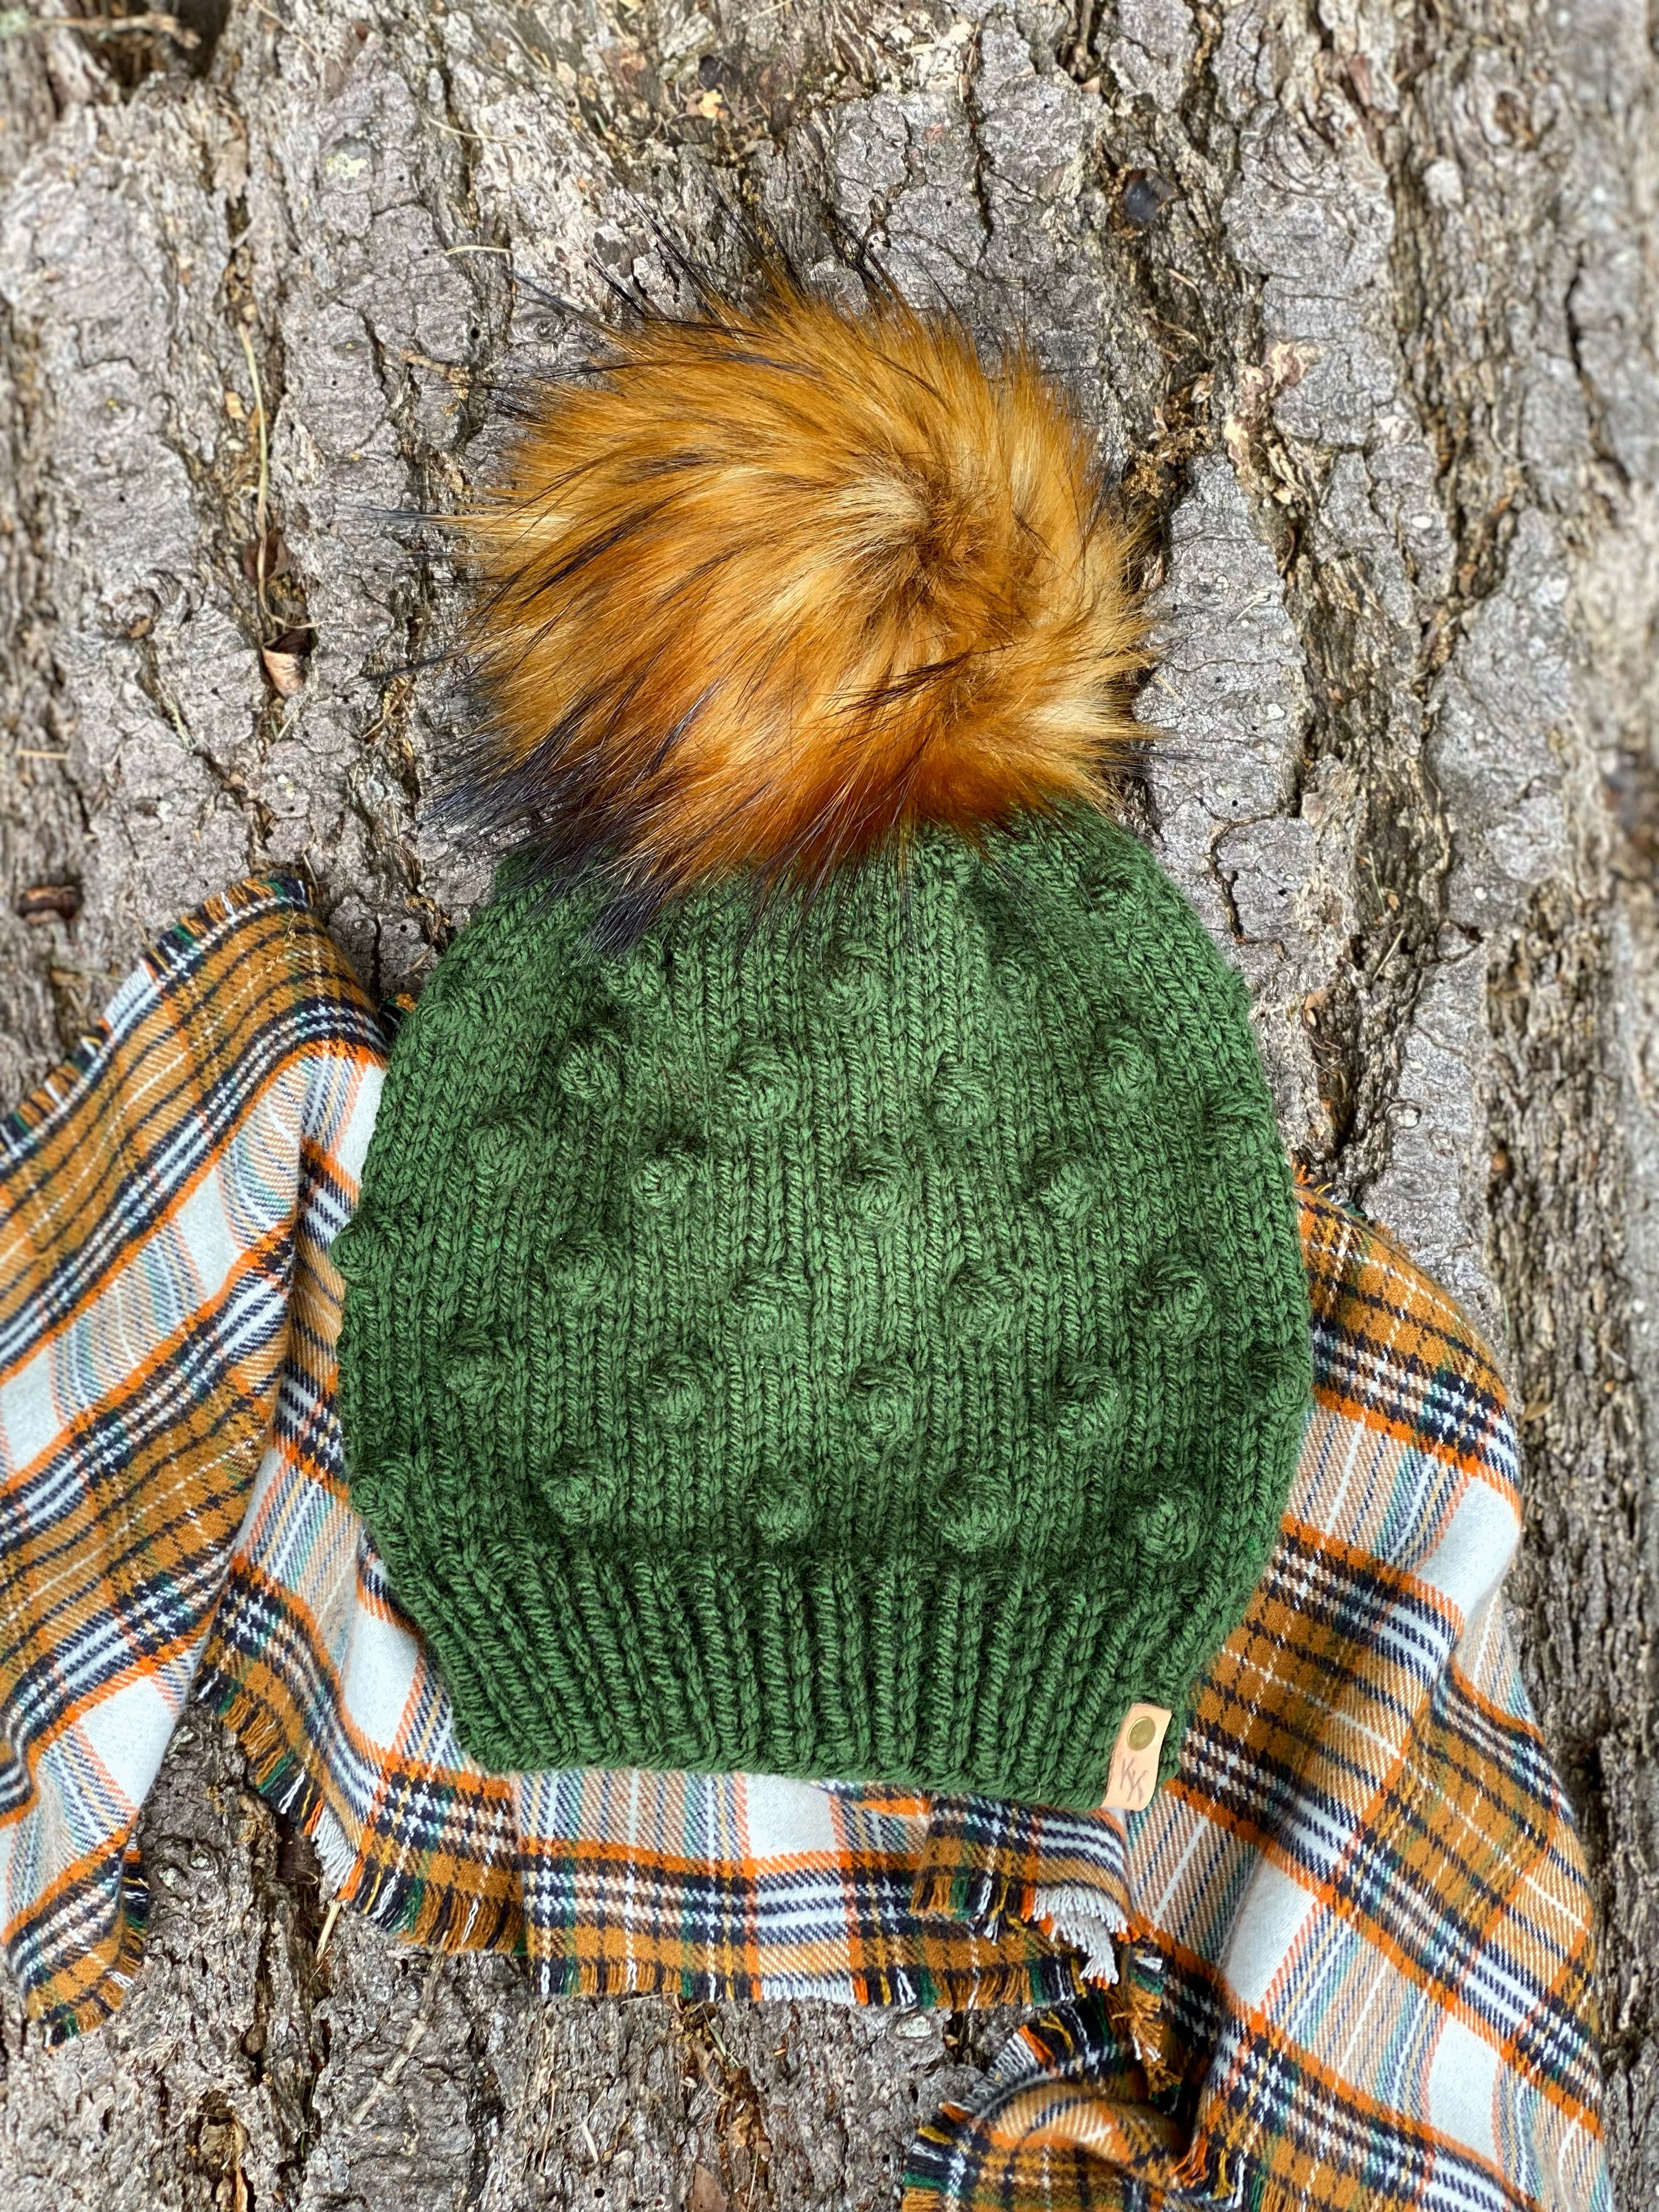 Knit Green Bobble Beanie, Womens Hand Knit Hat, Acrylic Yarn Faux Fur Pom